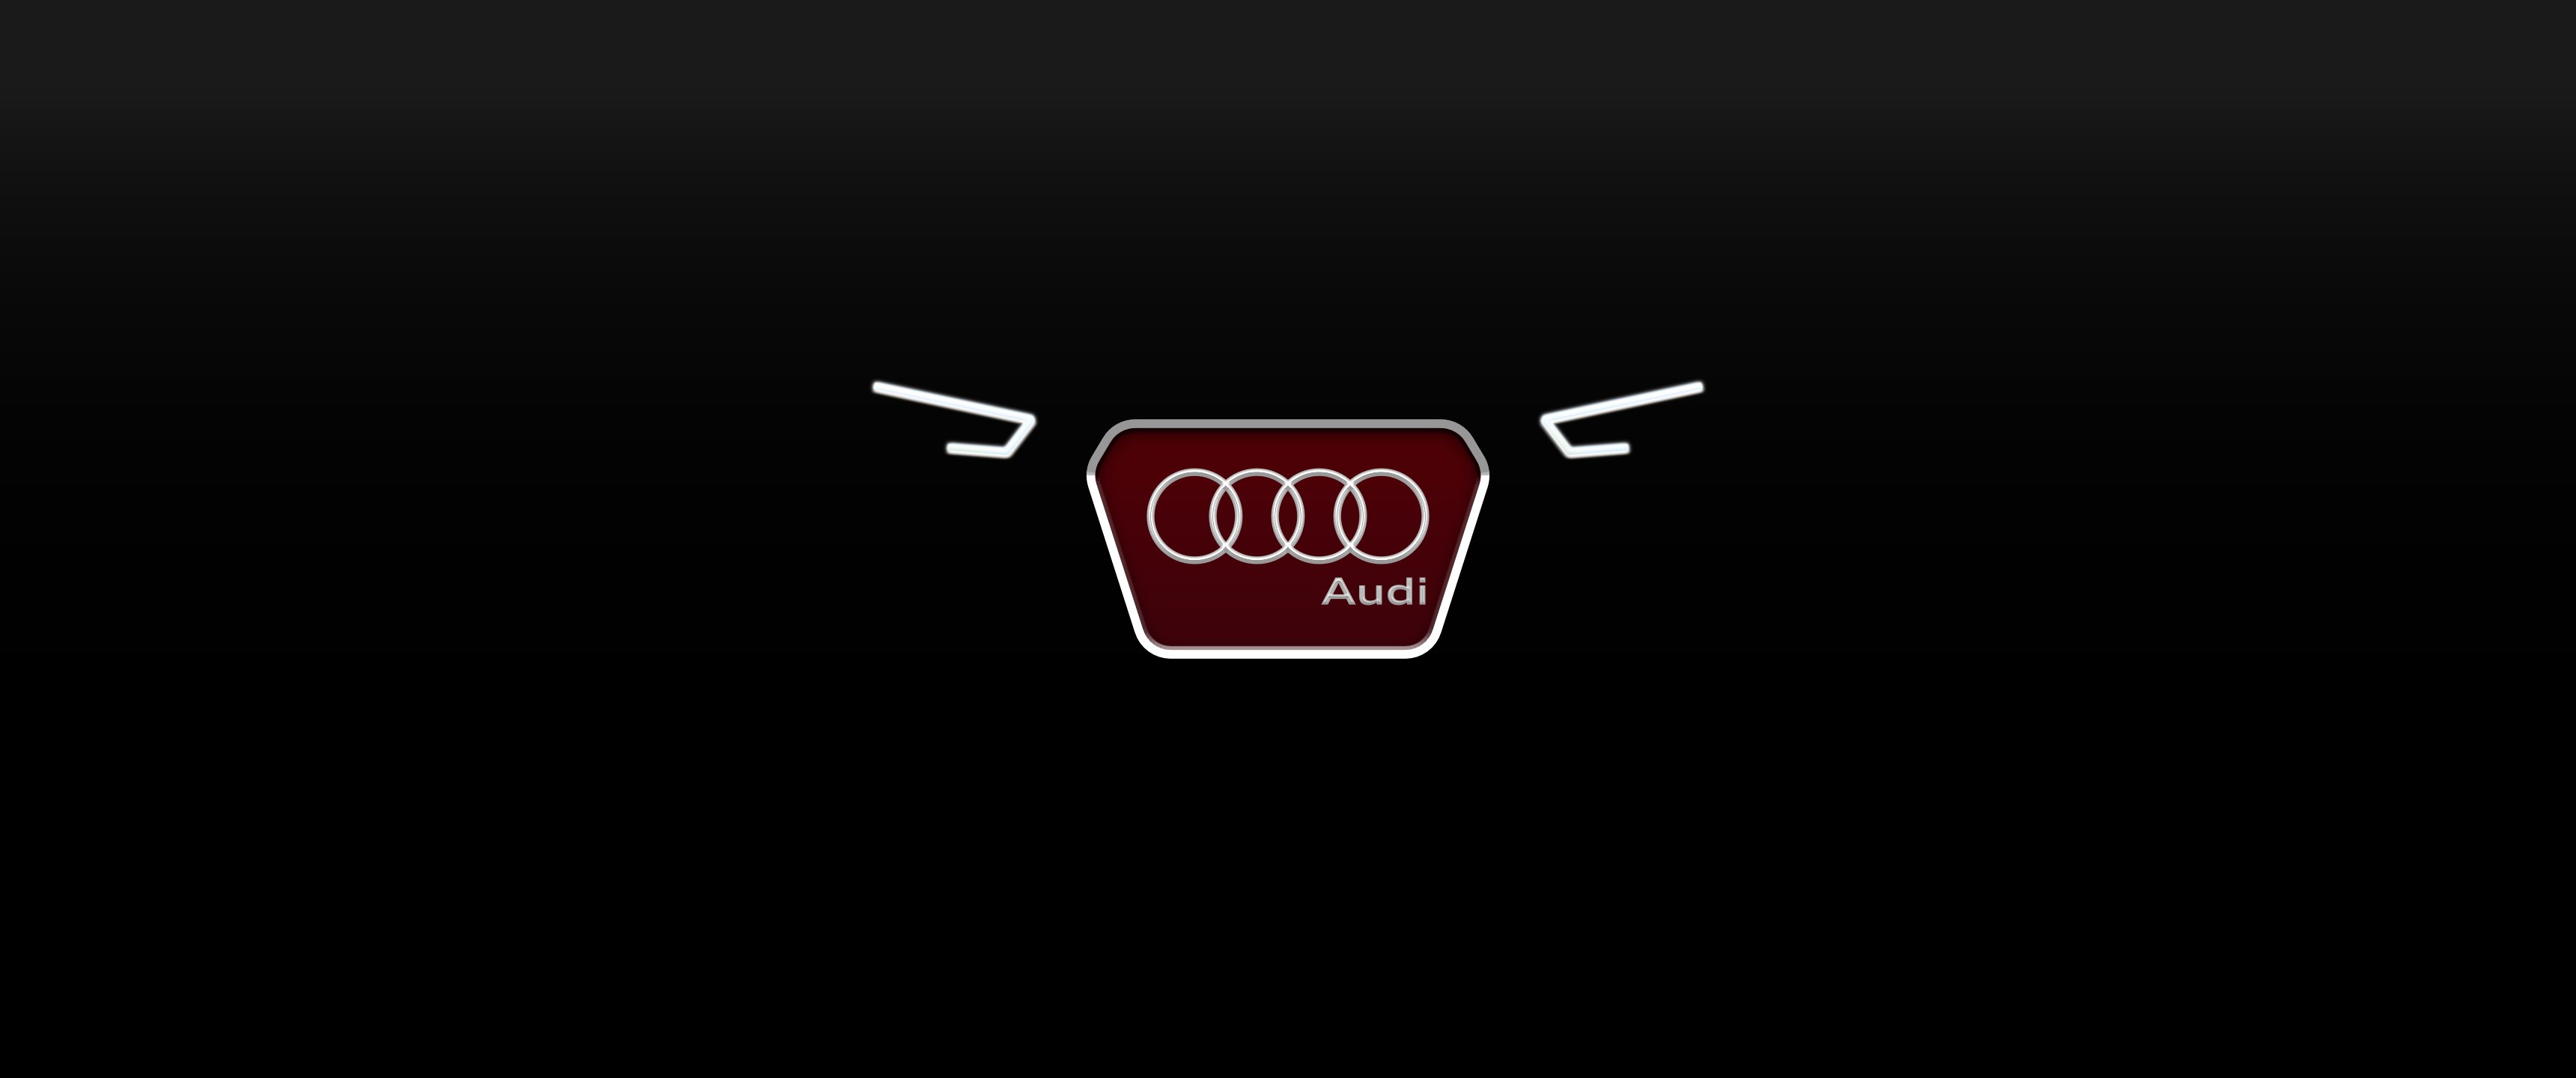 Audi Logo With Headlights HD Wallpaper